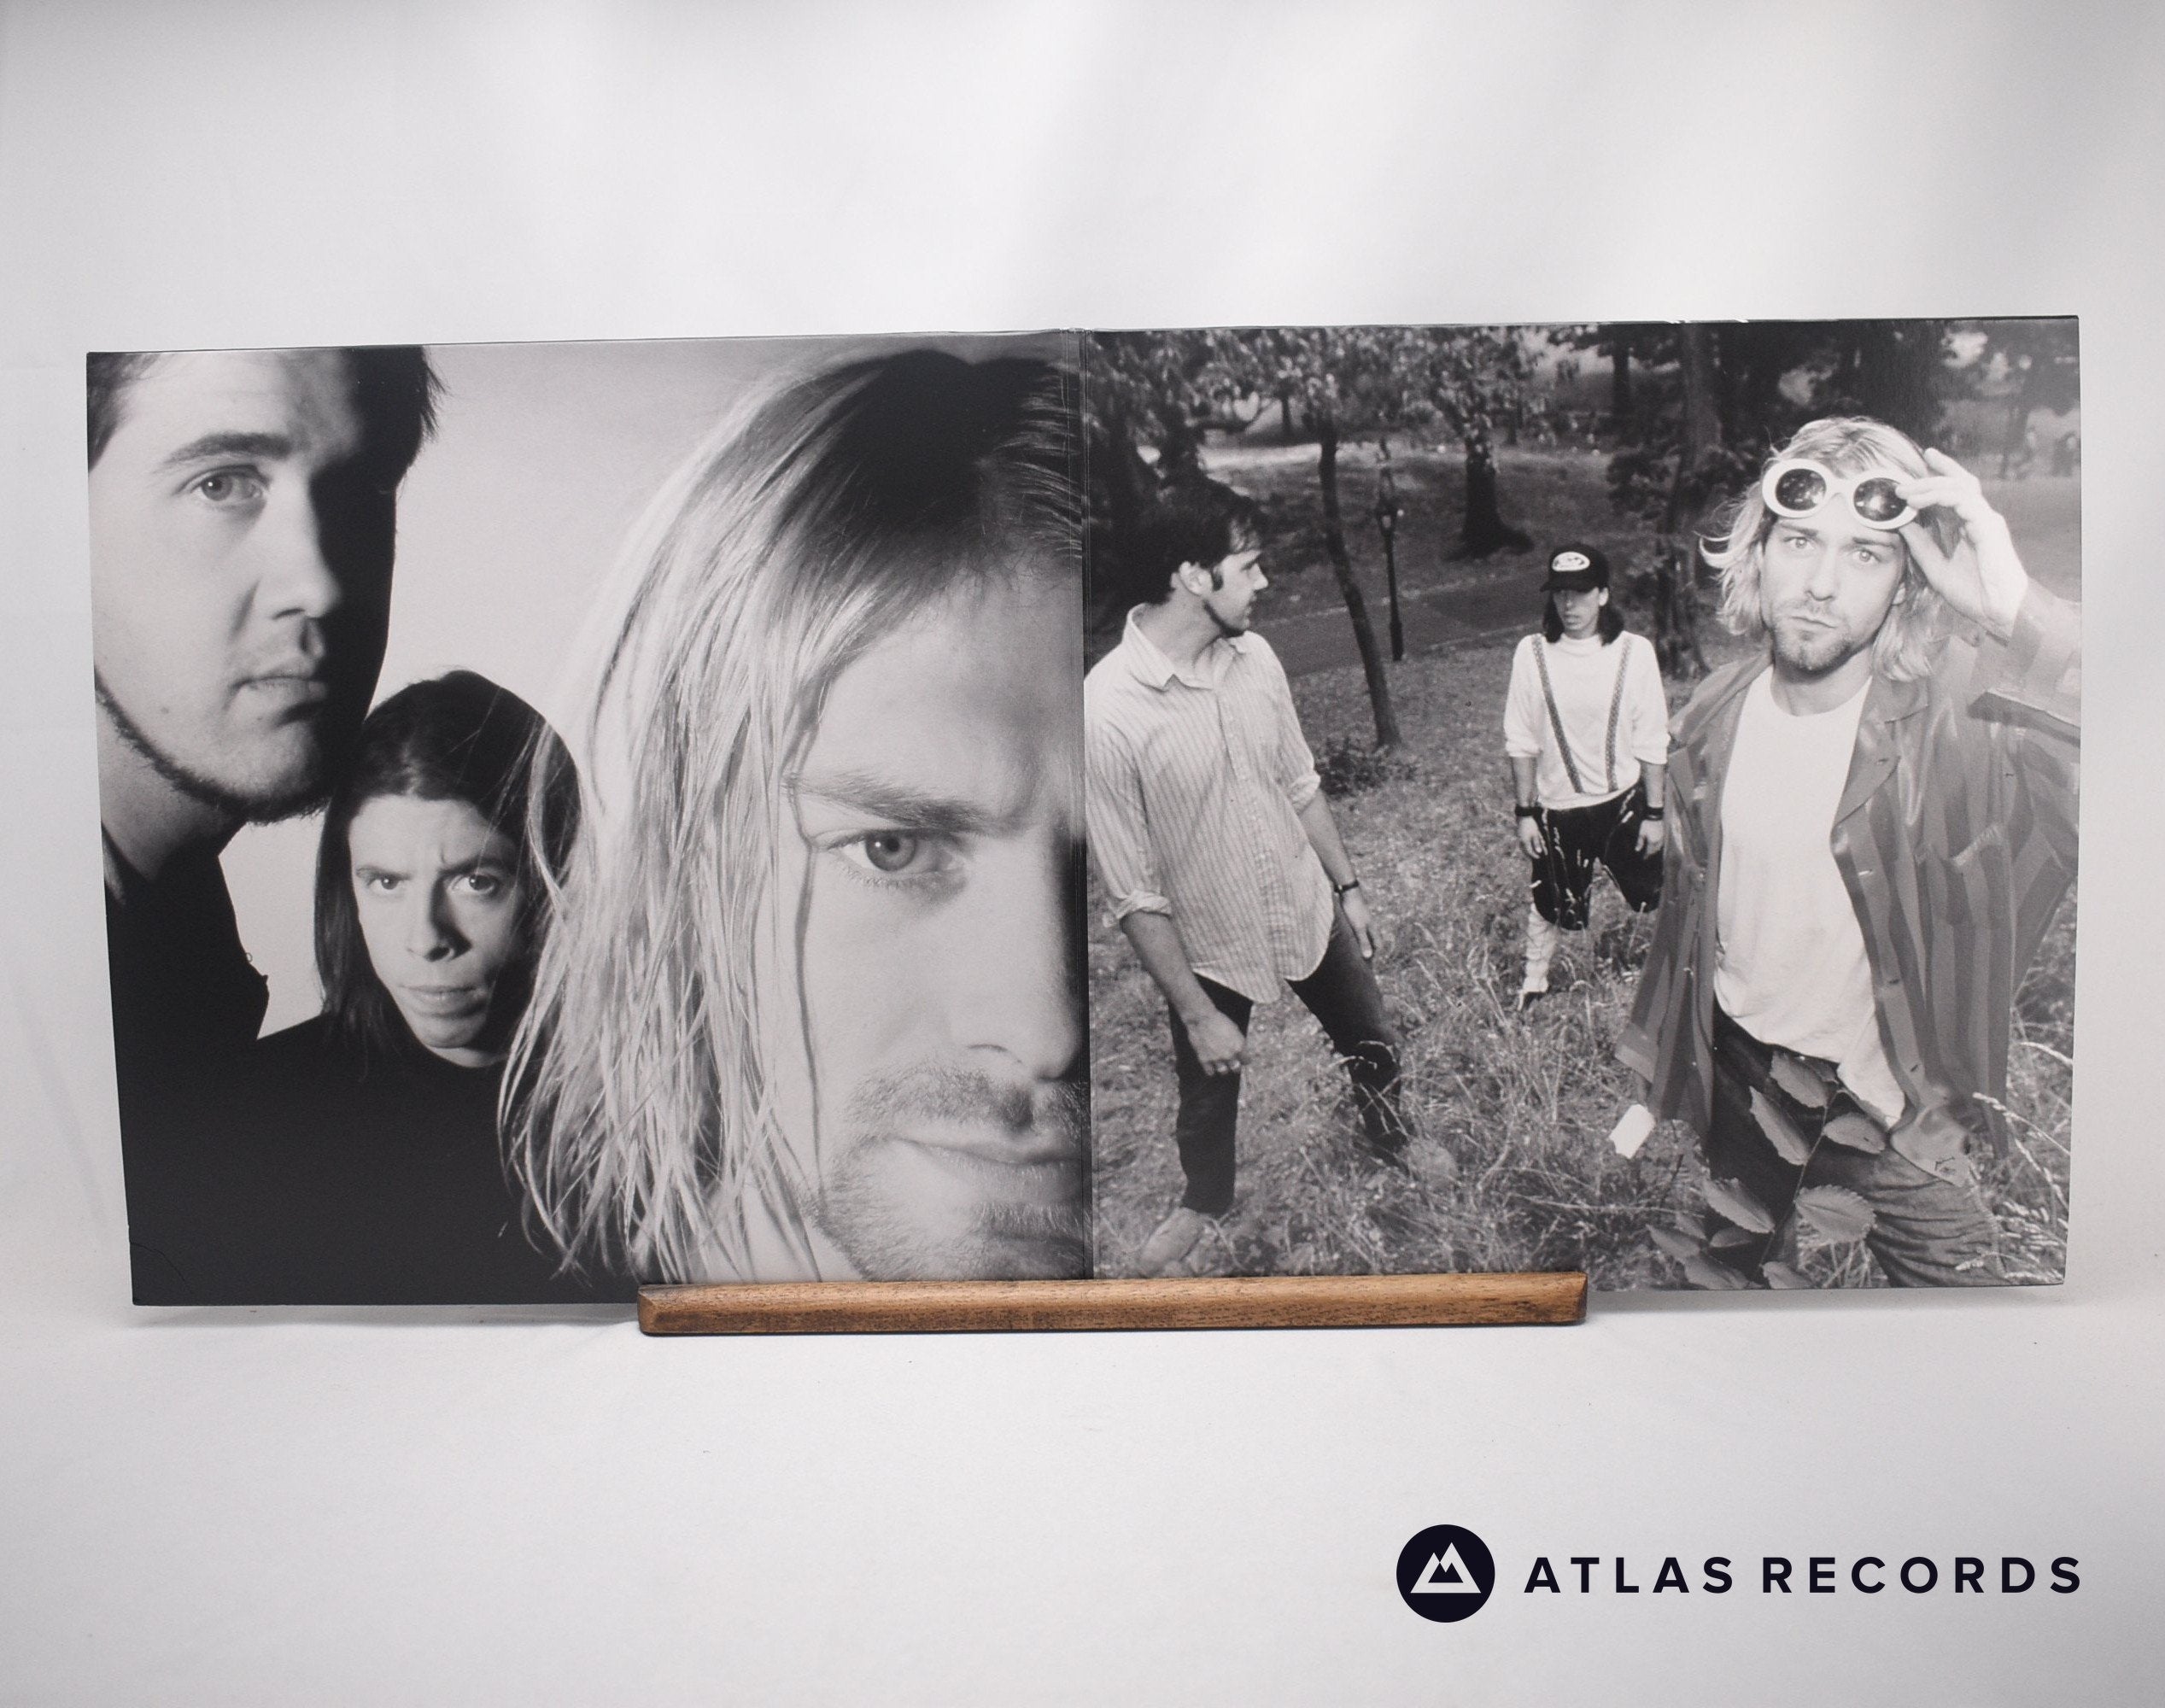 Nirvana (US) Nirvana - 180gram 45rpm UK 2-LP vinyl set — RareVinyl.com